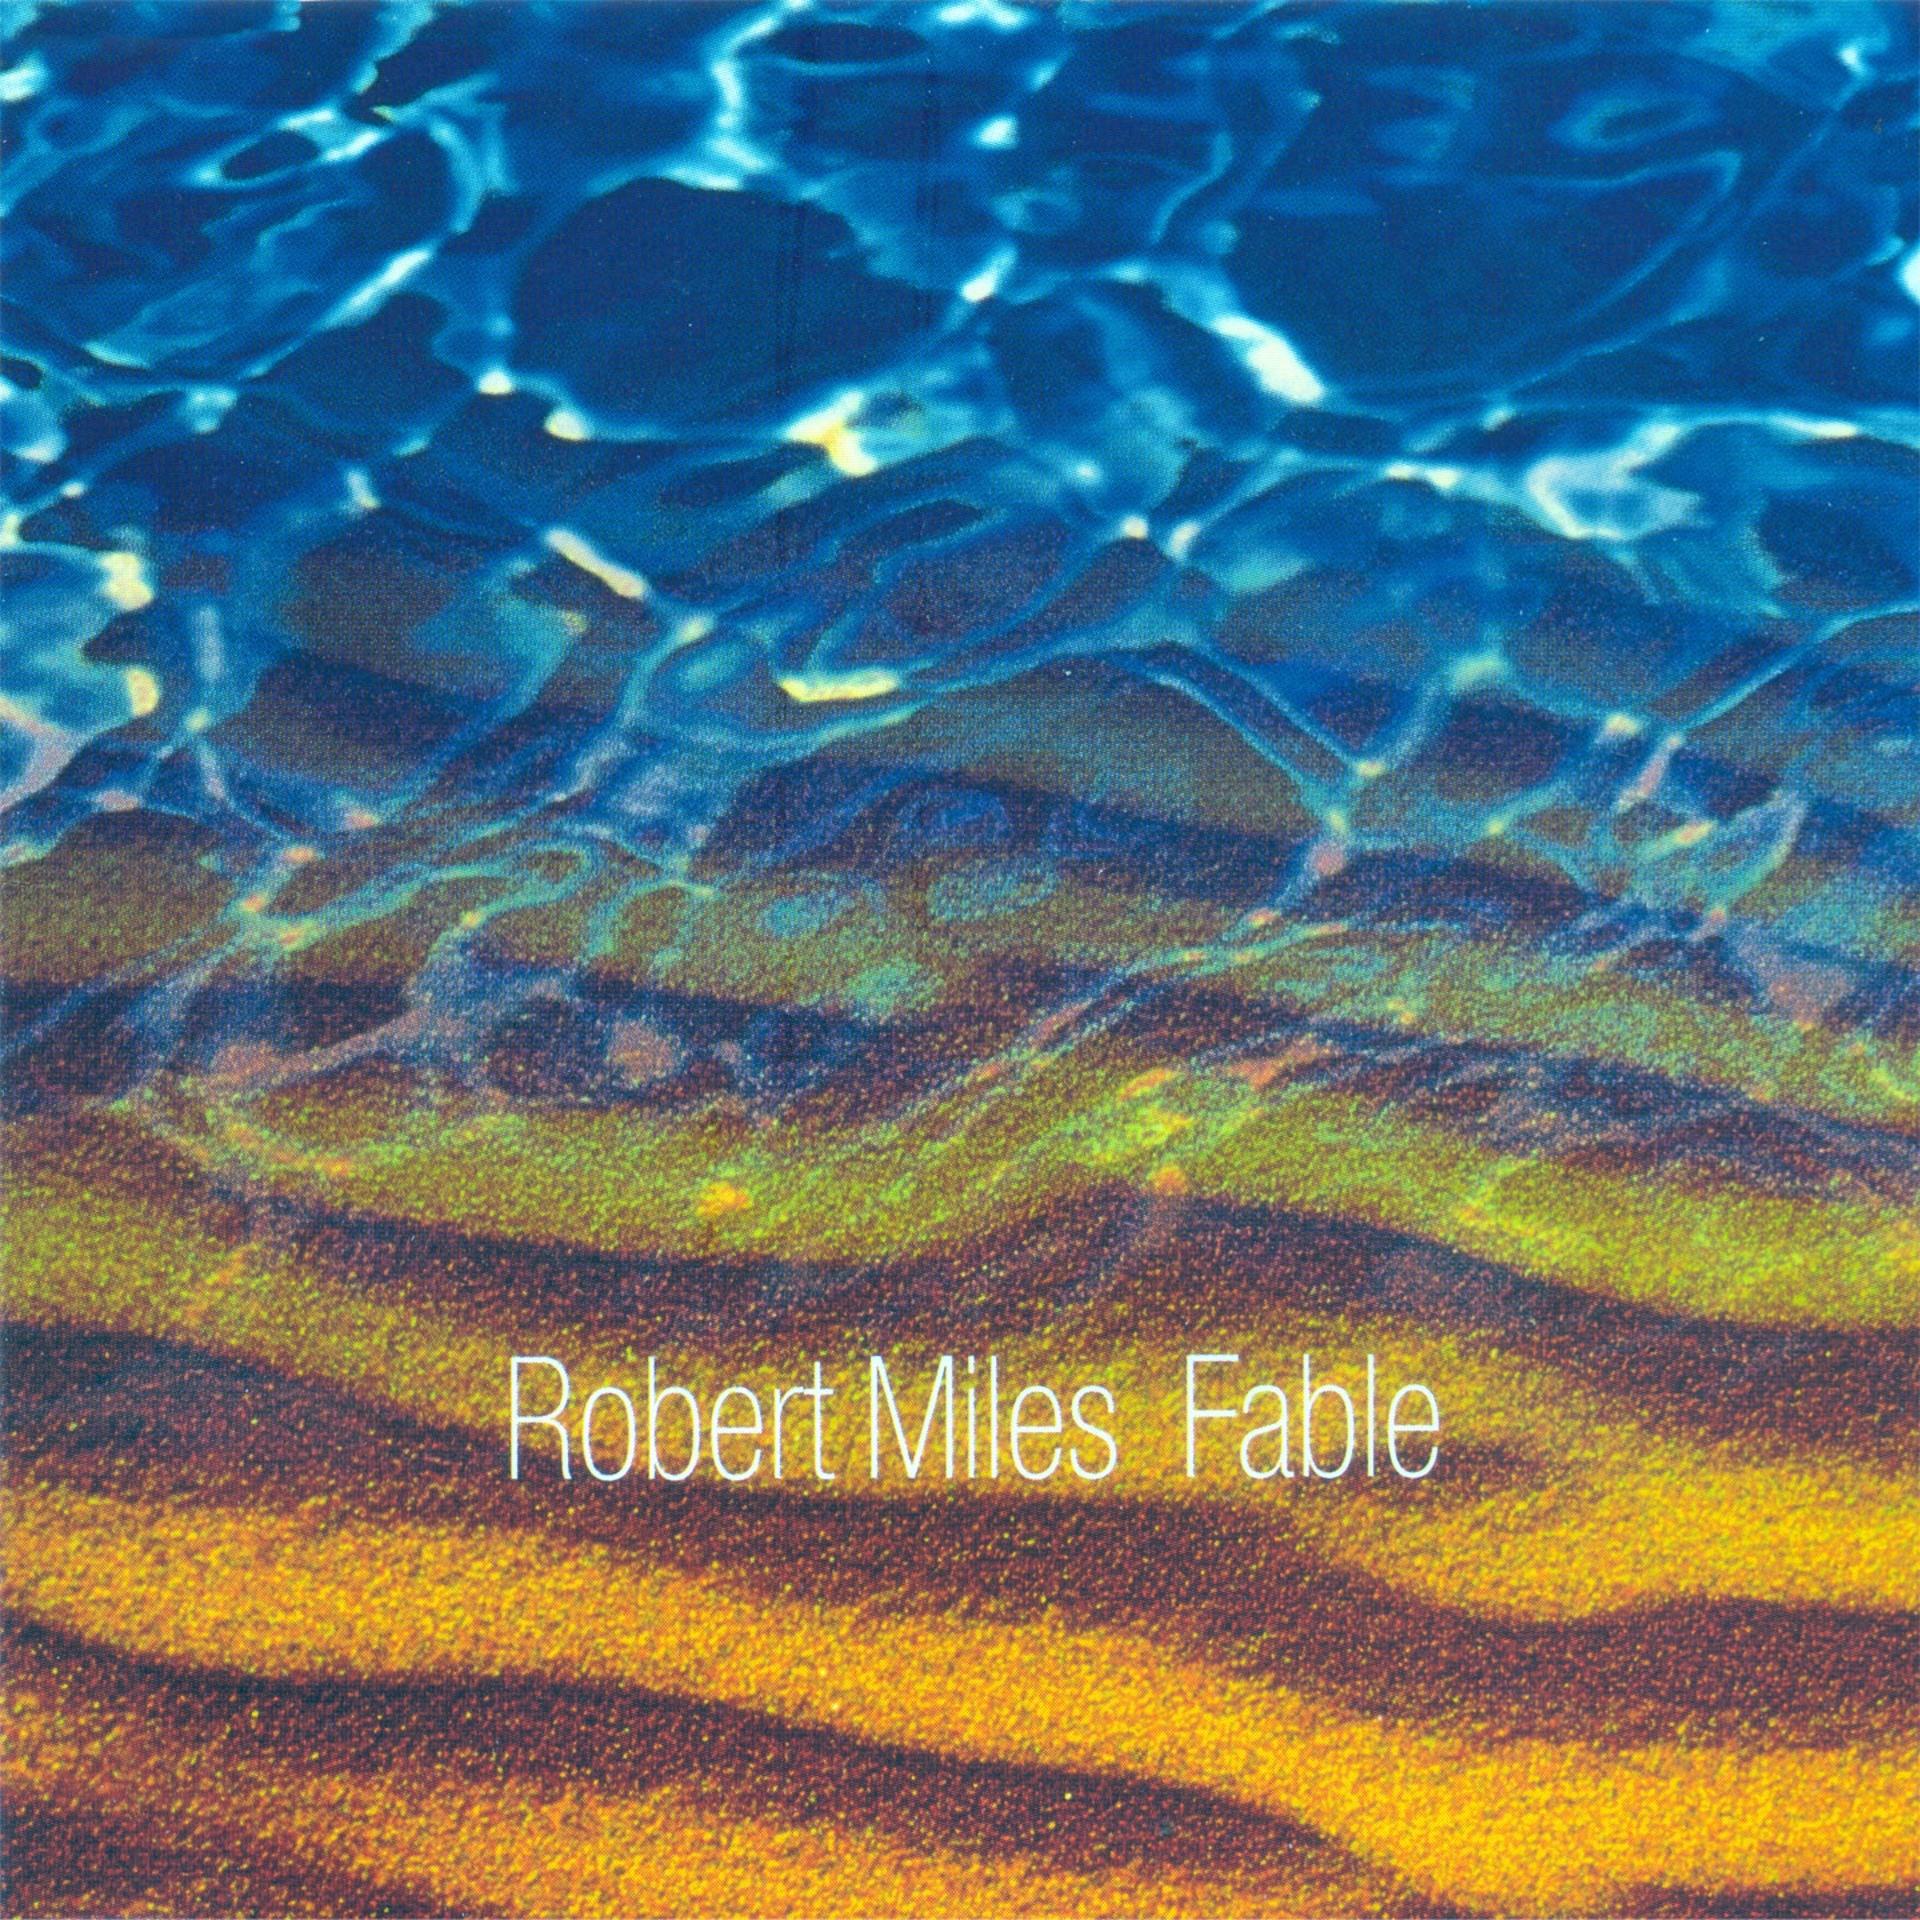 Robert miles dreaming. Robert Miles - (1996) Fable. Robert Miles Fable (Dream Version). Robert Miles - Fable год. Robert Miles albums.